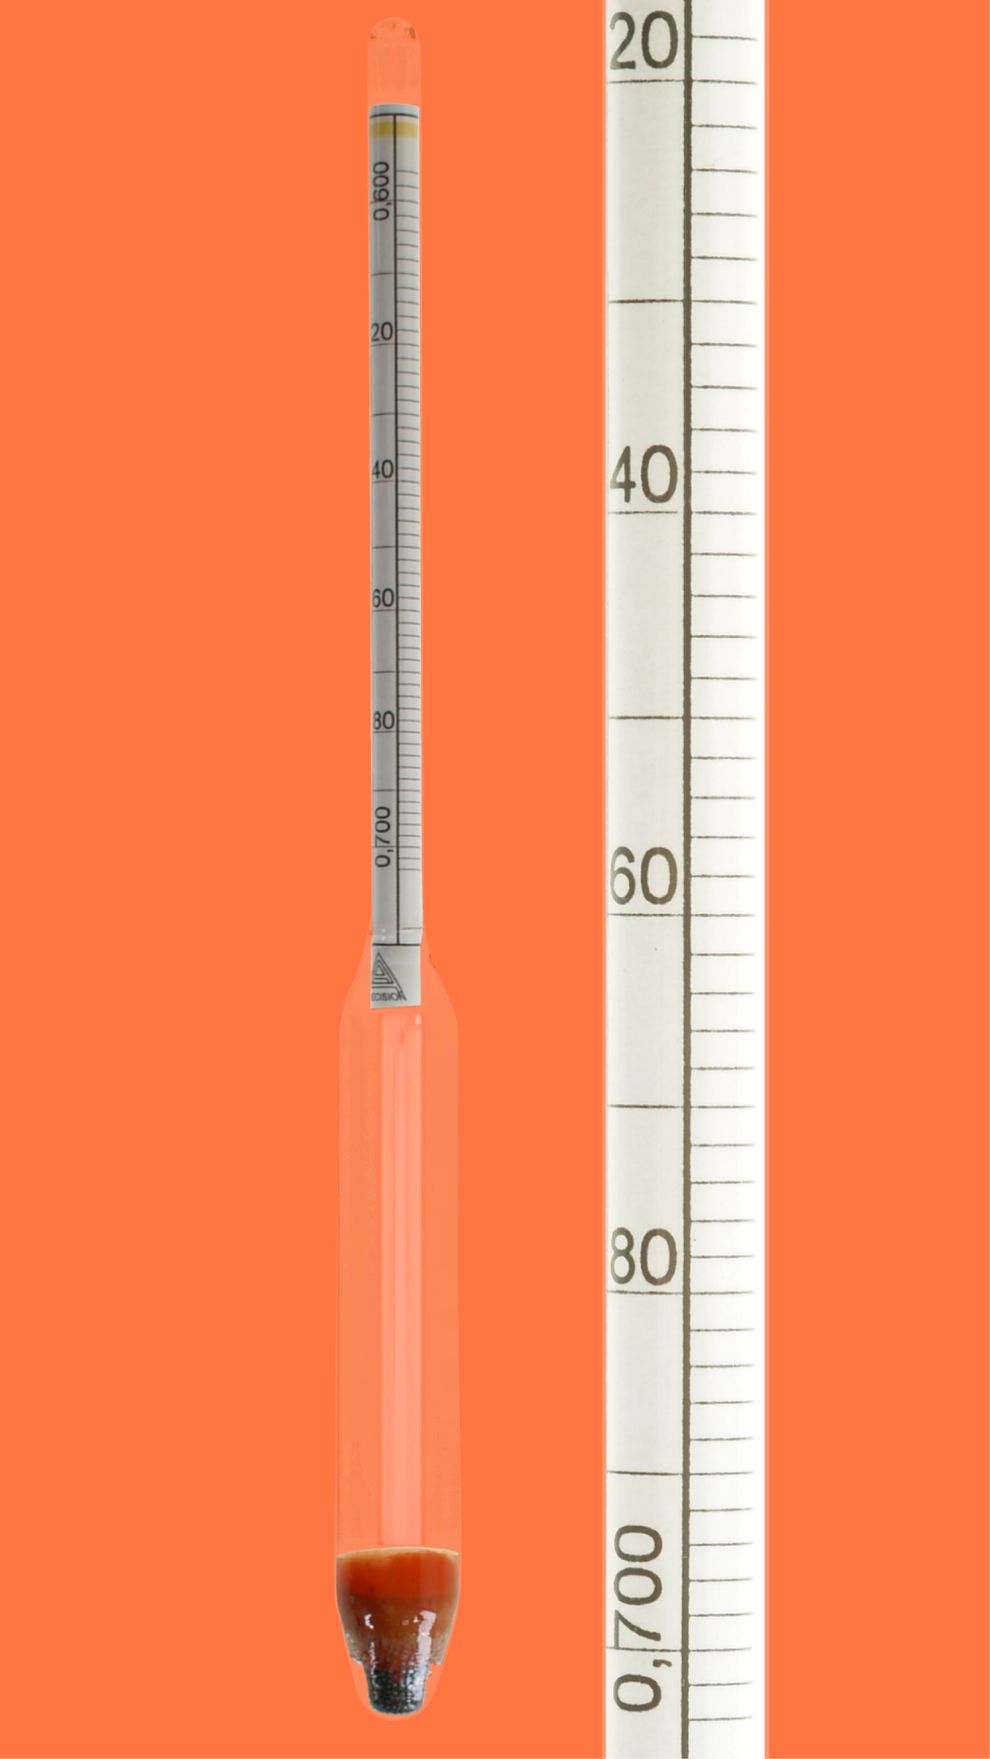 Aräometer, DIN 12791, M100, 1,50-1,60:0,0020g/cm³, Bezugstemp. 20°C, ohne Thermometer